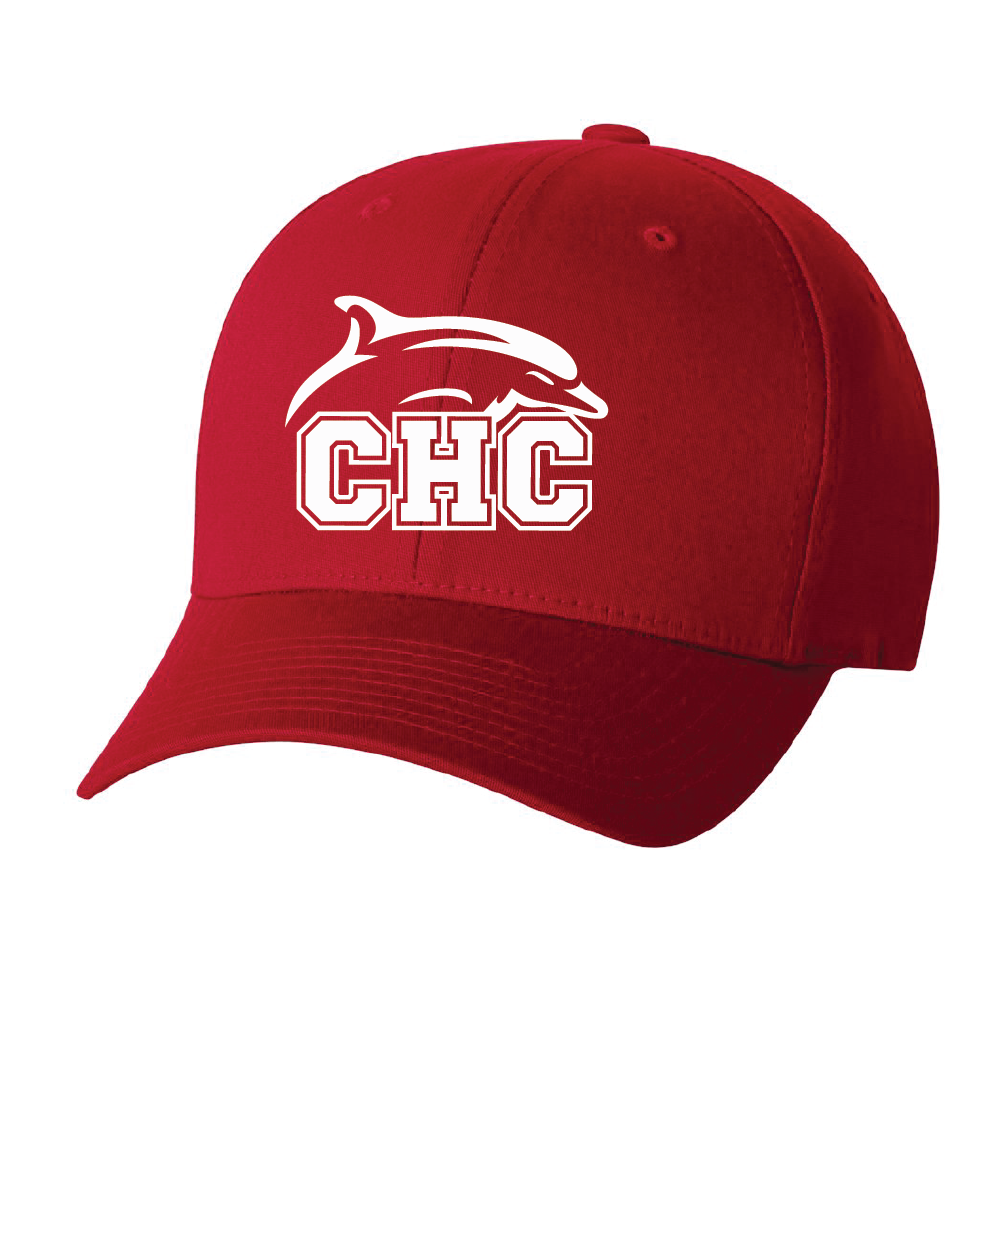 V-Flex Twill Cap / Red / Cape Henry Collegiate Softball